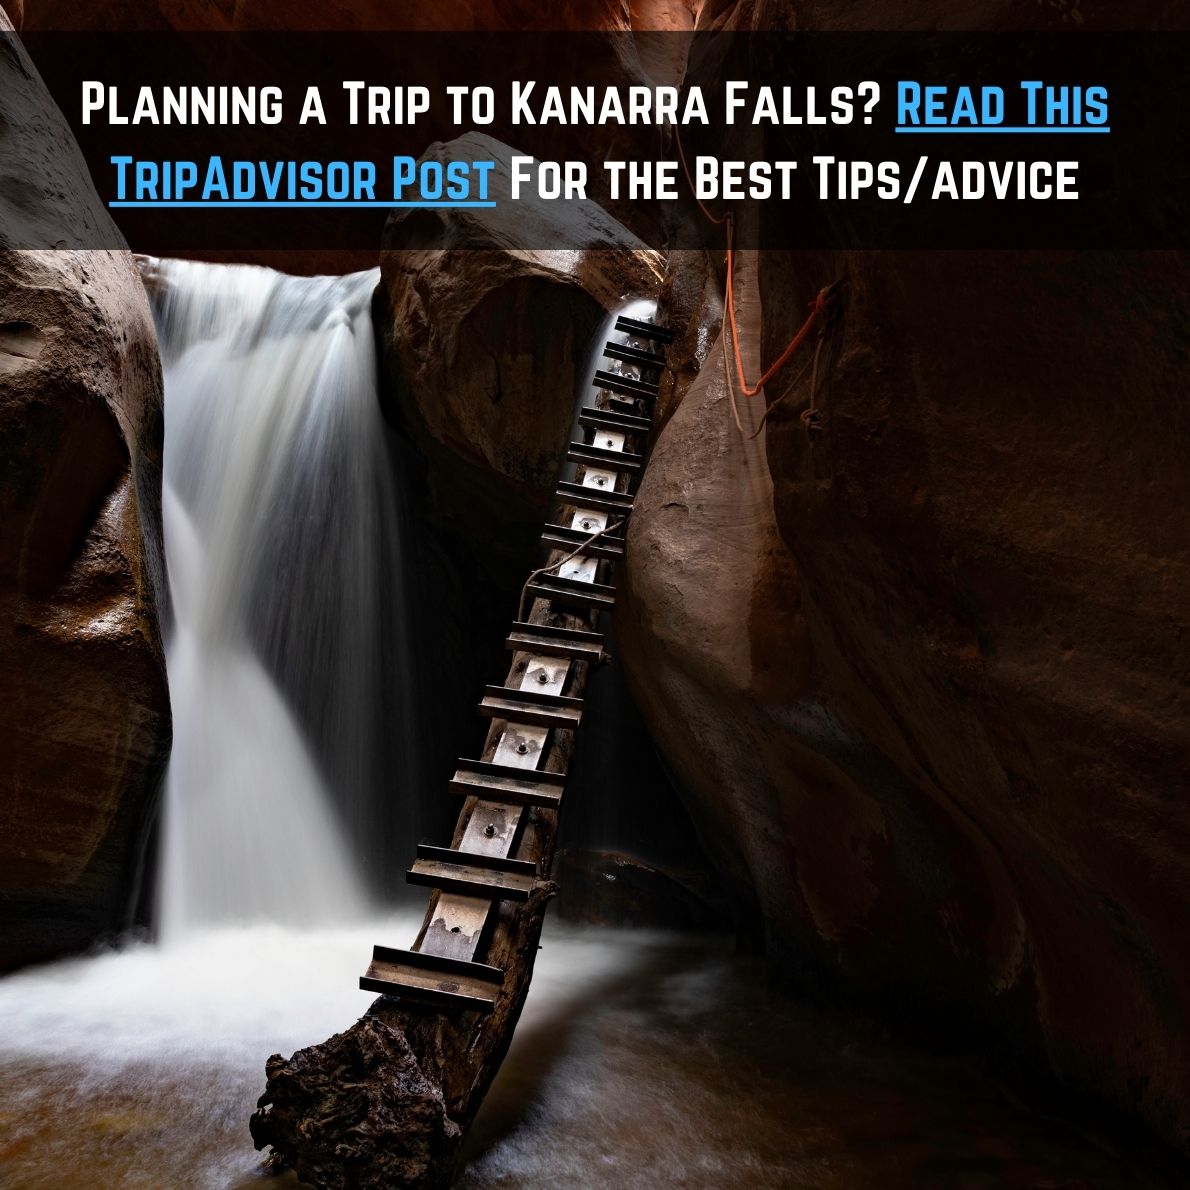 kanarra falls tripadvisor post 02